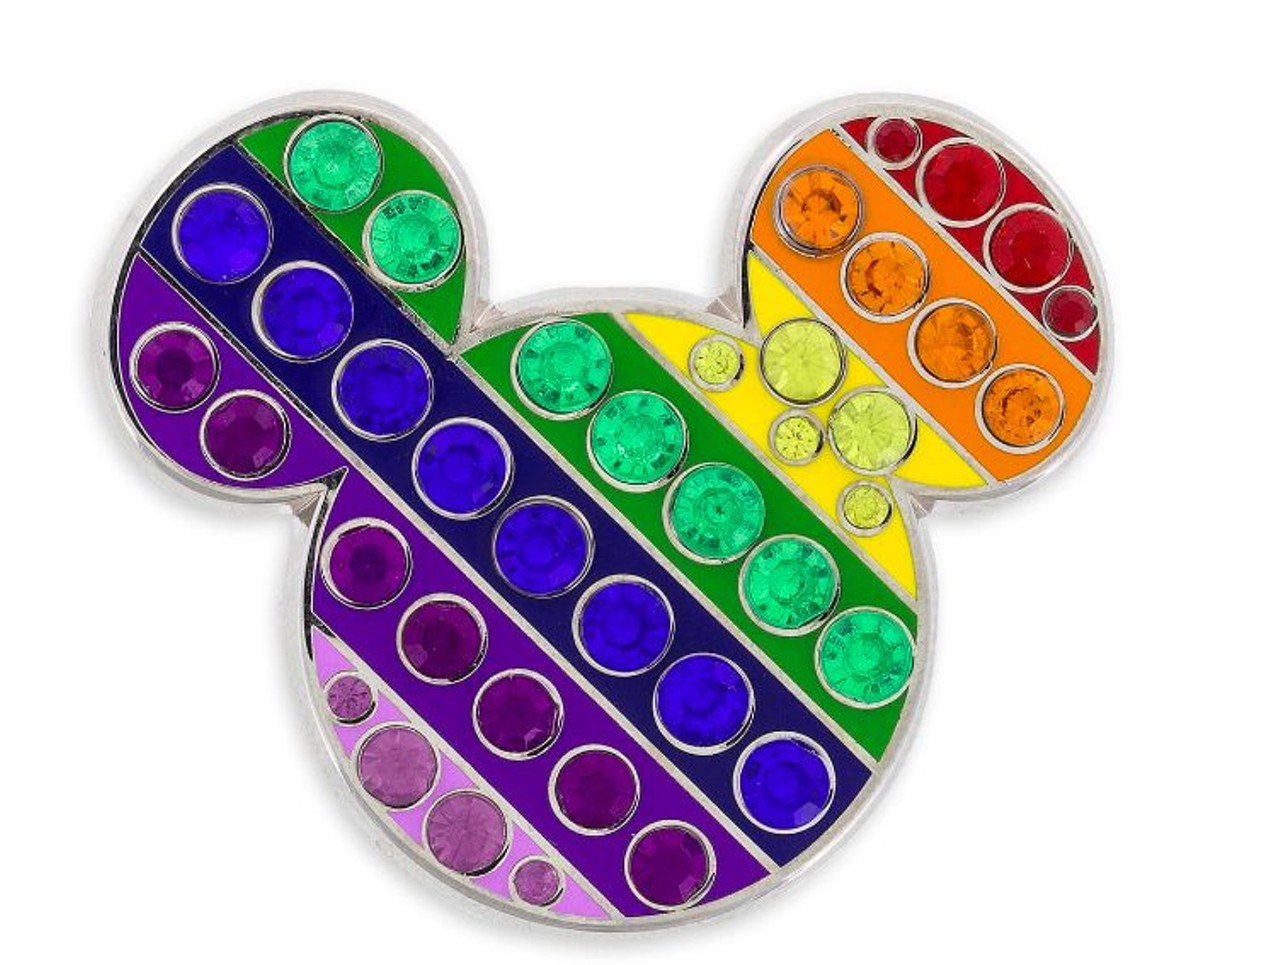 Mickey Mouse icon pin
A silvertone pin with a rainbow of rhinestones, $12.99.
Photo via shopDisney